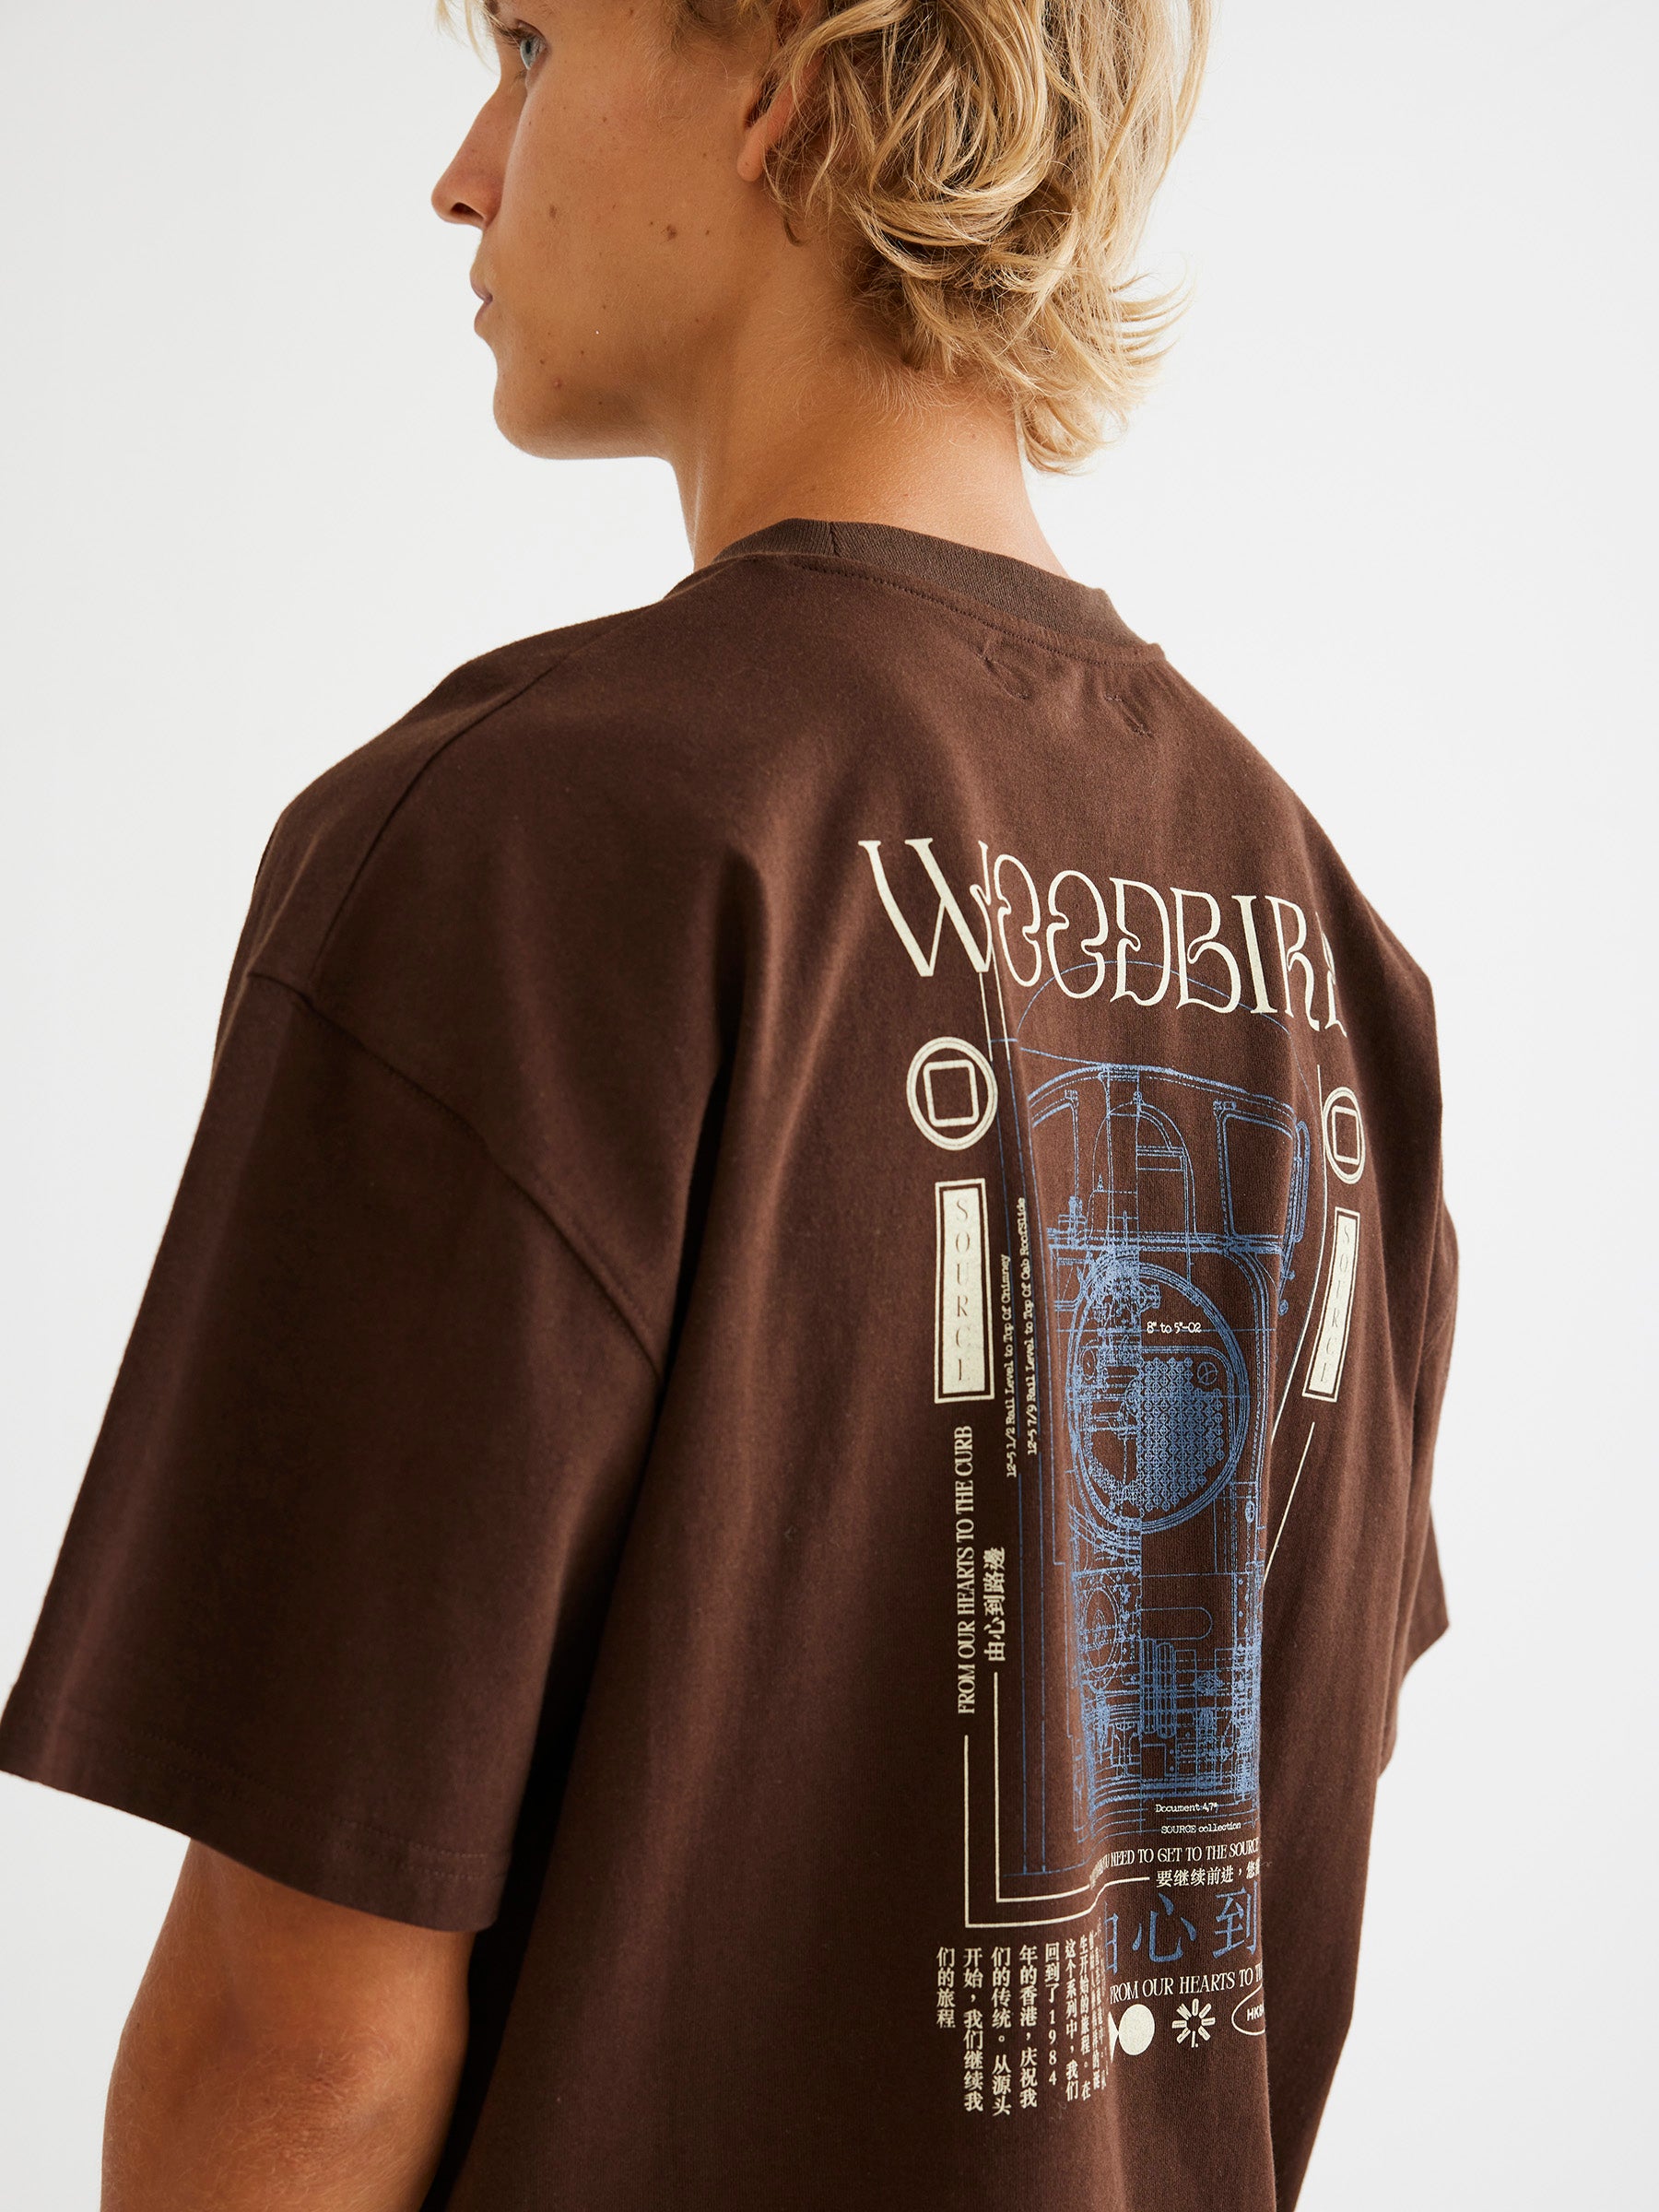 Woodbird WBBaine Train Tee T-Shirts Brown